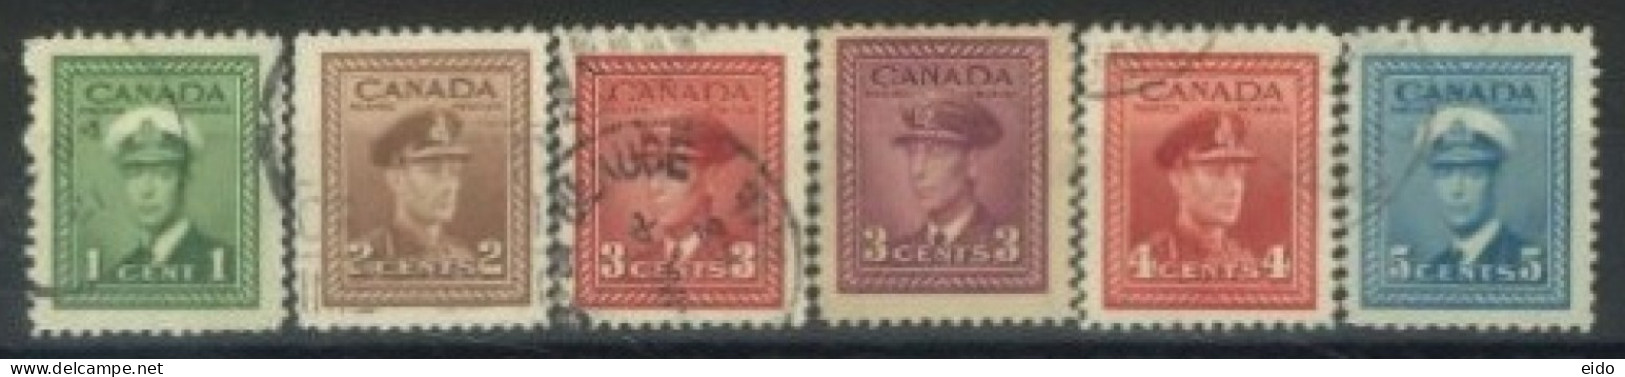 CANADA - 1942, KING GEORGE VI IN NAVAL UNIFORM STAMPS SET OF 6, USED. - Gebraucht